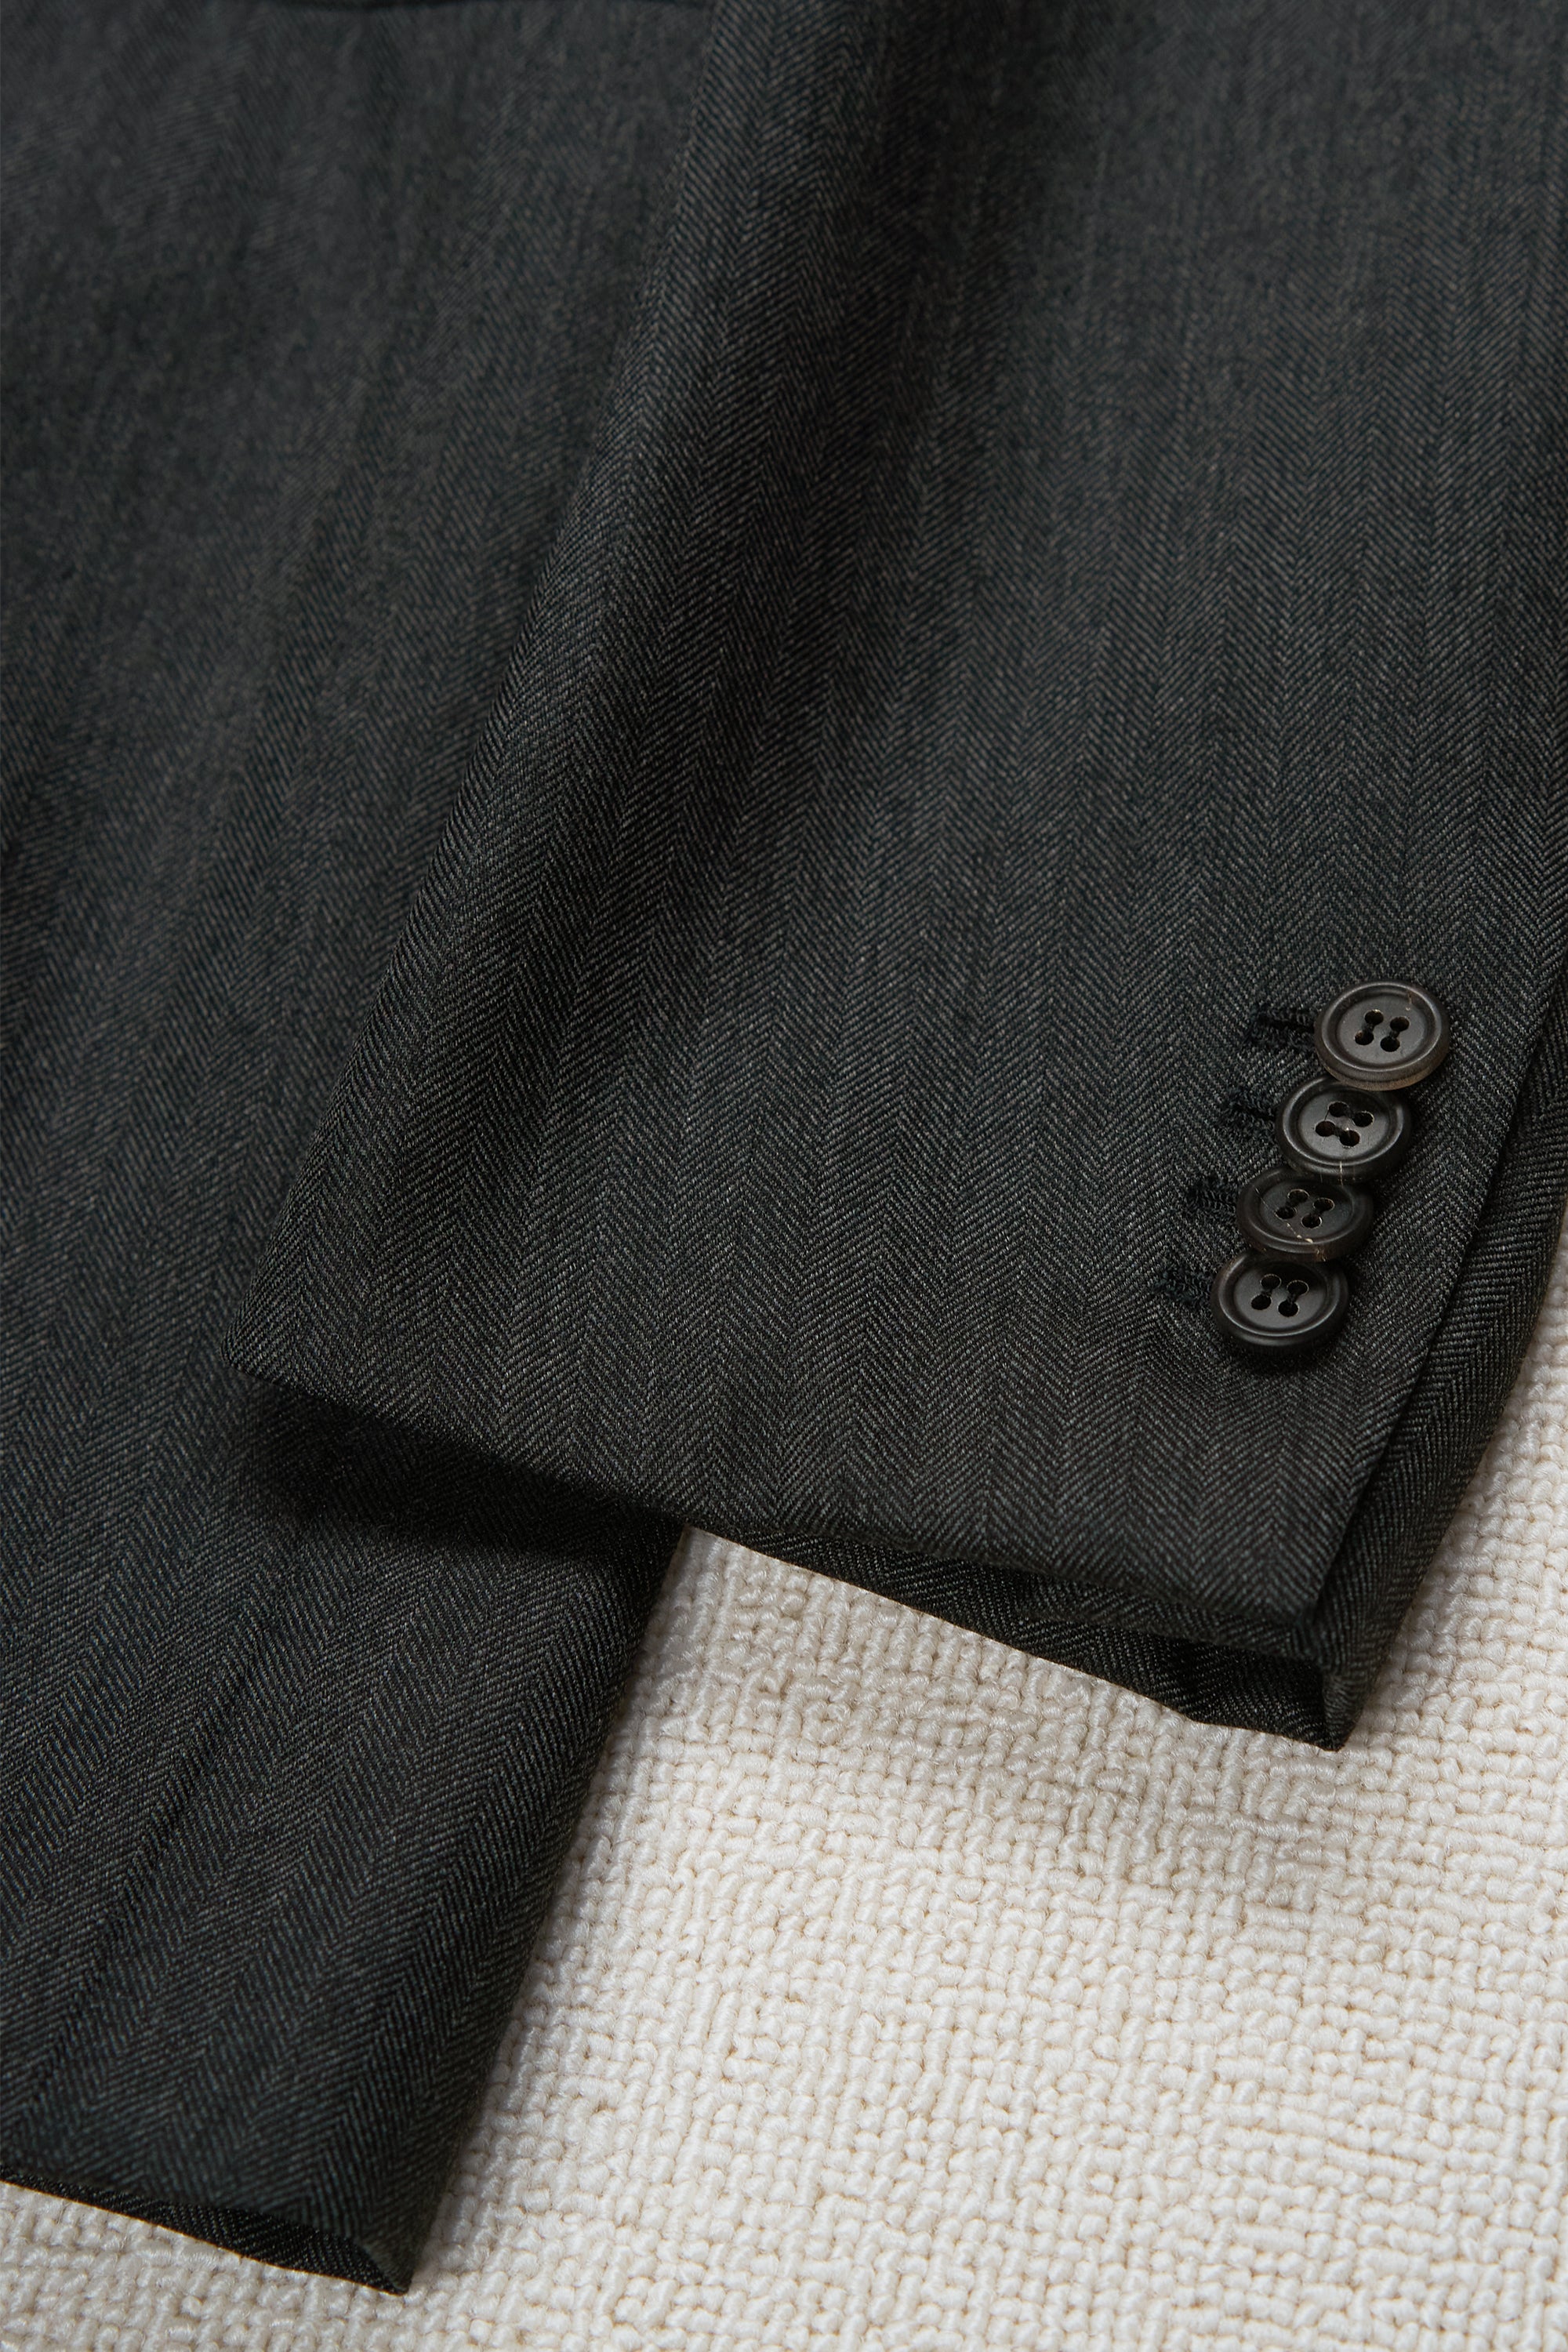 Orazio Luciano Dark Grey Herringbone Wool Suit